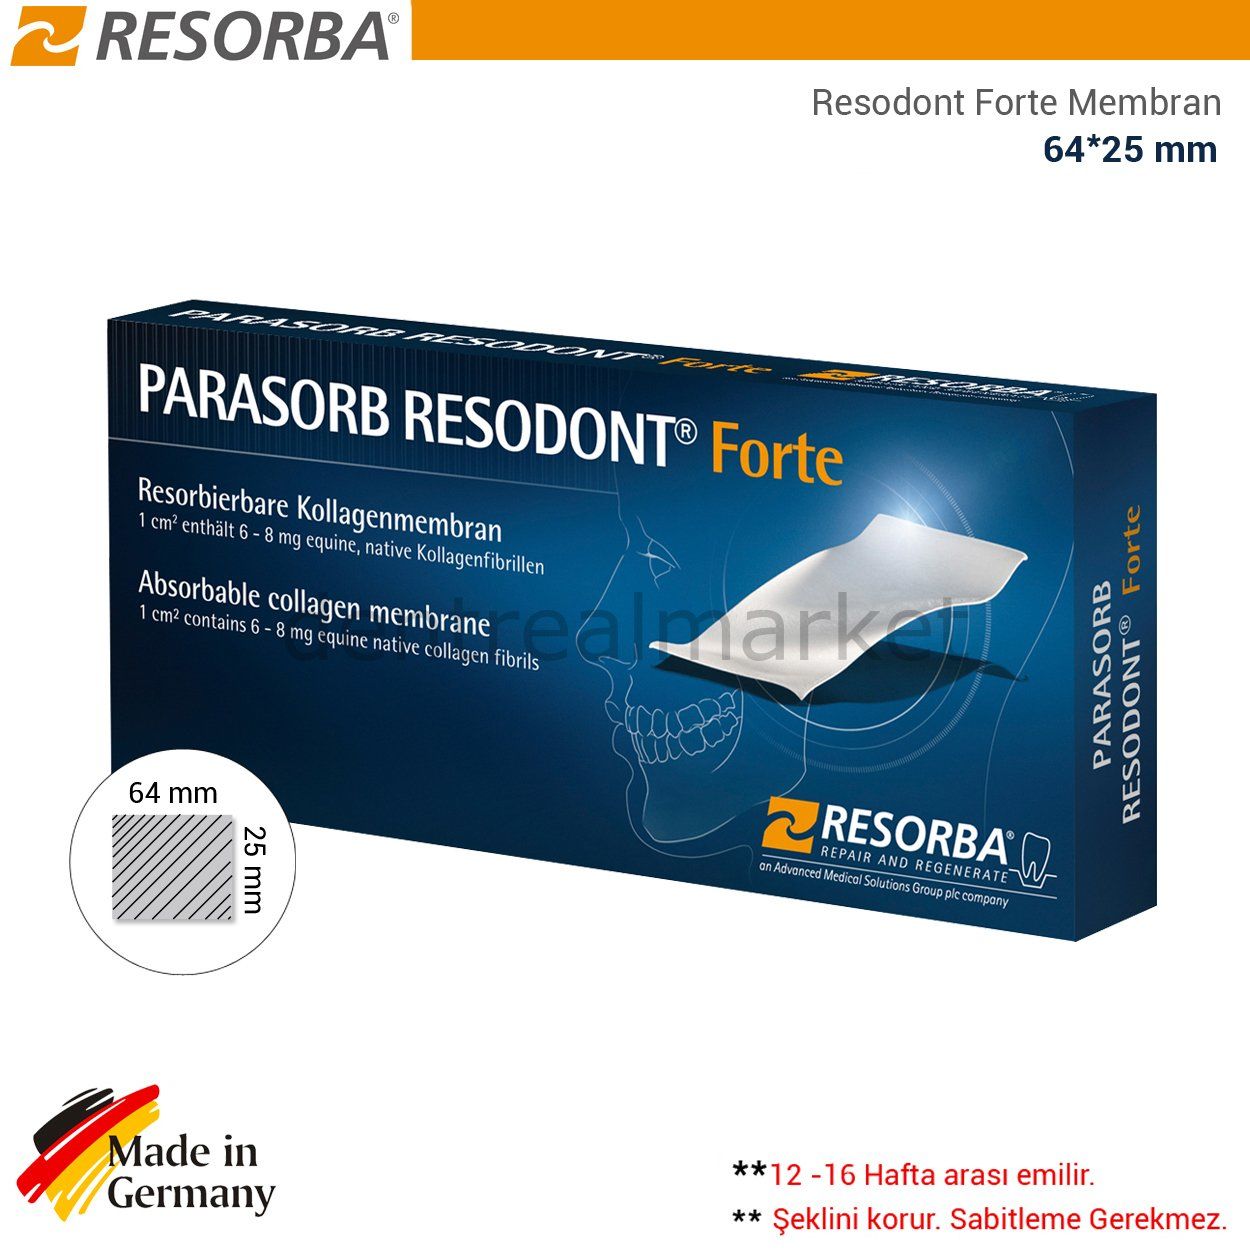 Parasorb Resodont Forte - Collagen Membran 64*25 mm